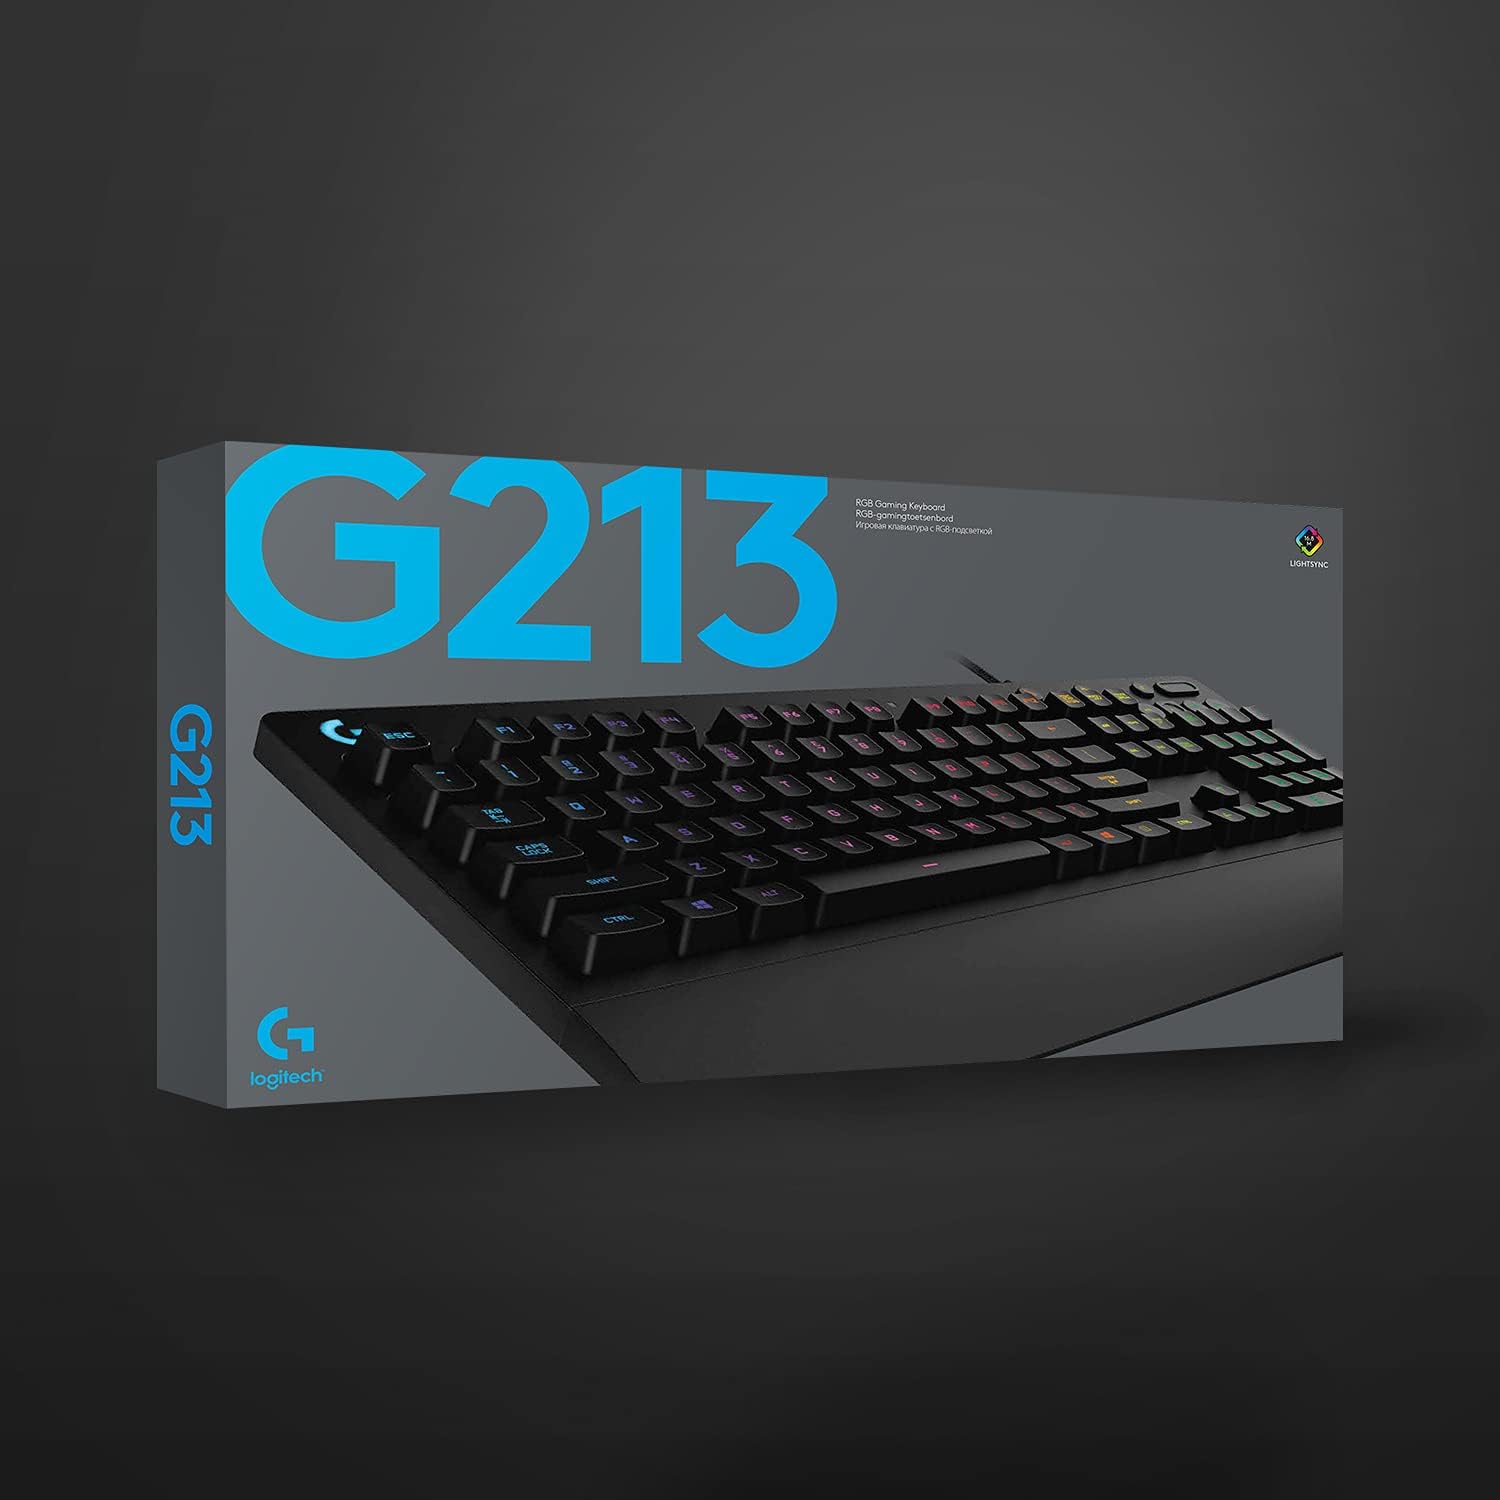 G213 Prodigy Gaming